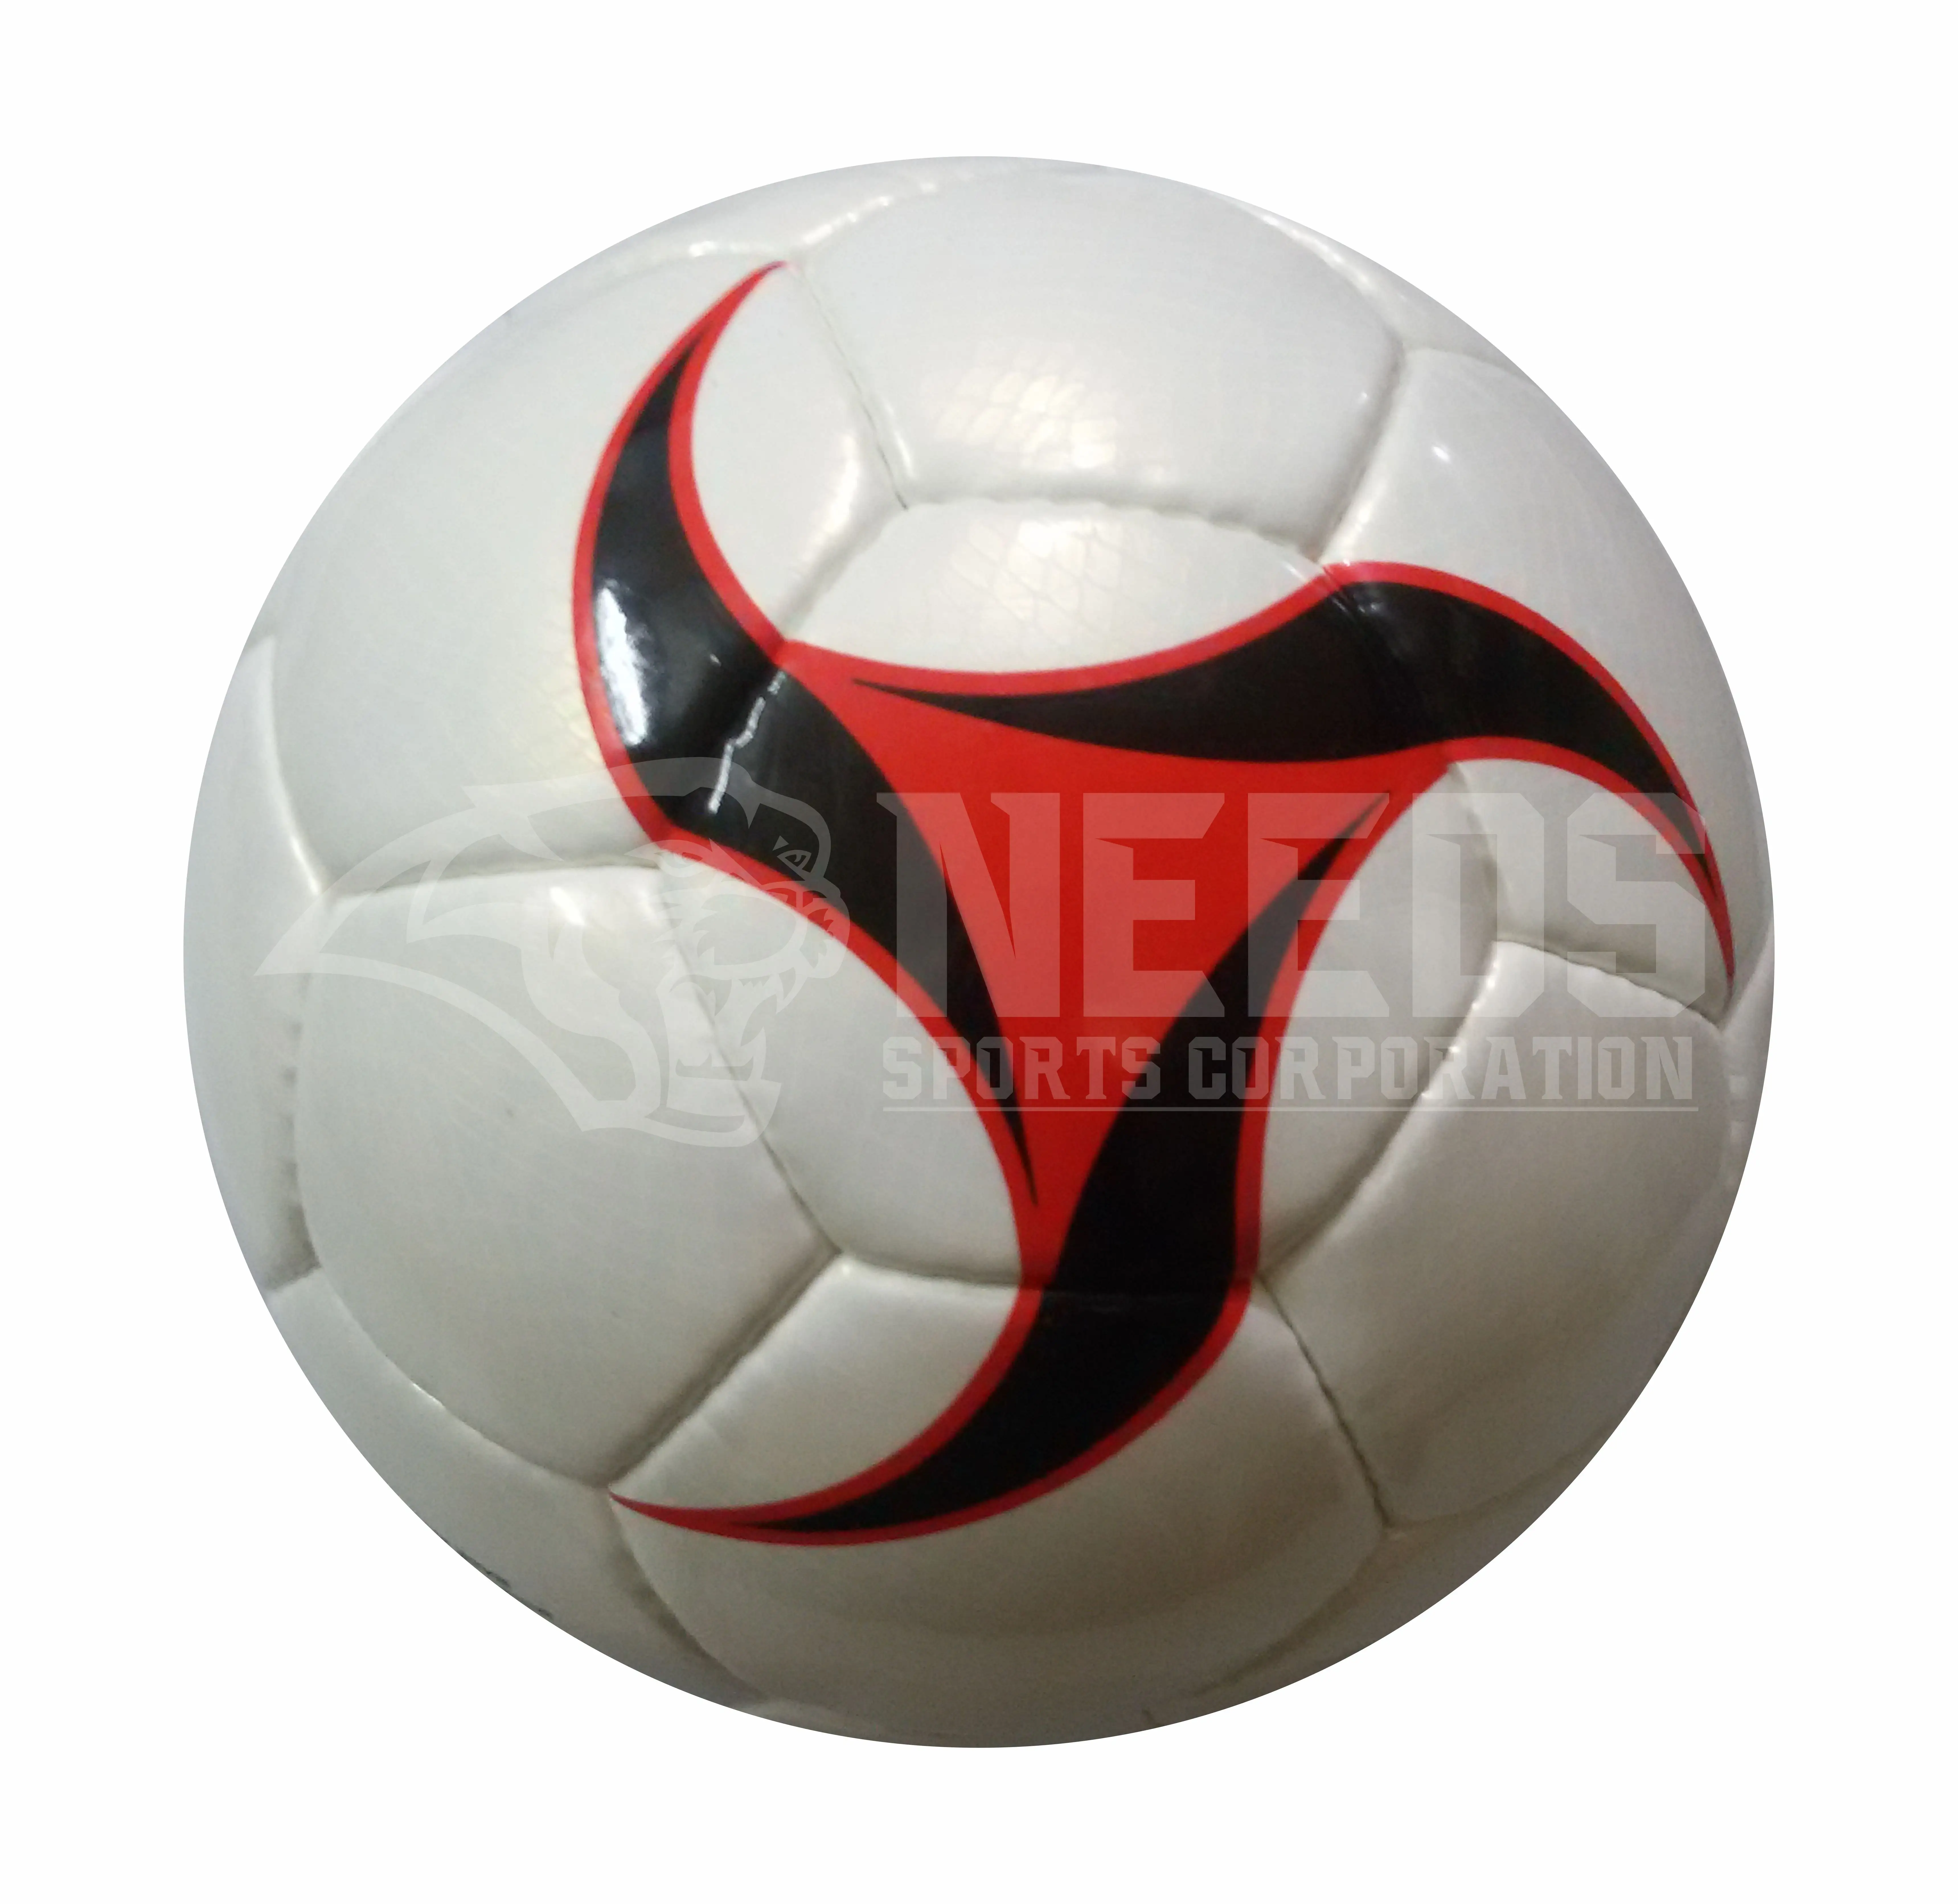 High quality custom design 100% PU football size 3 4 5 soccer ball made in Pakistan